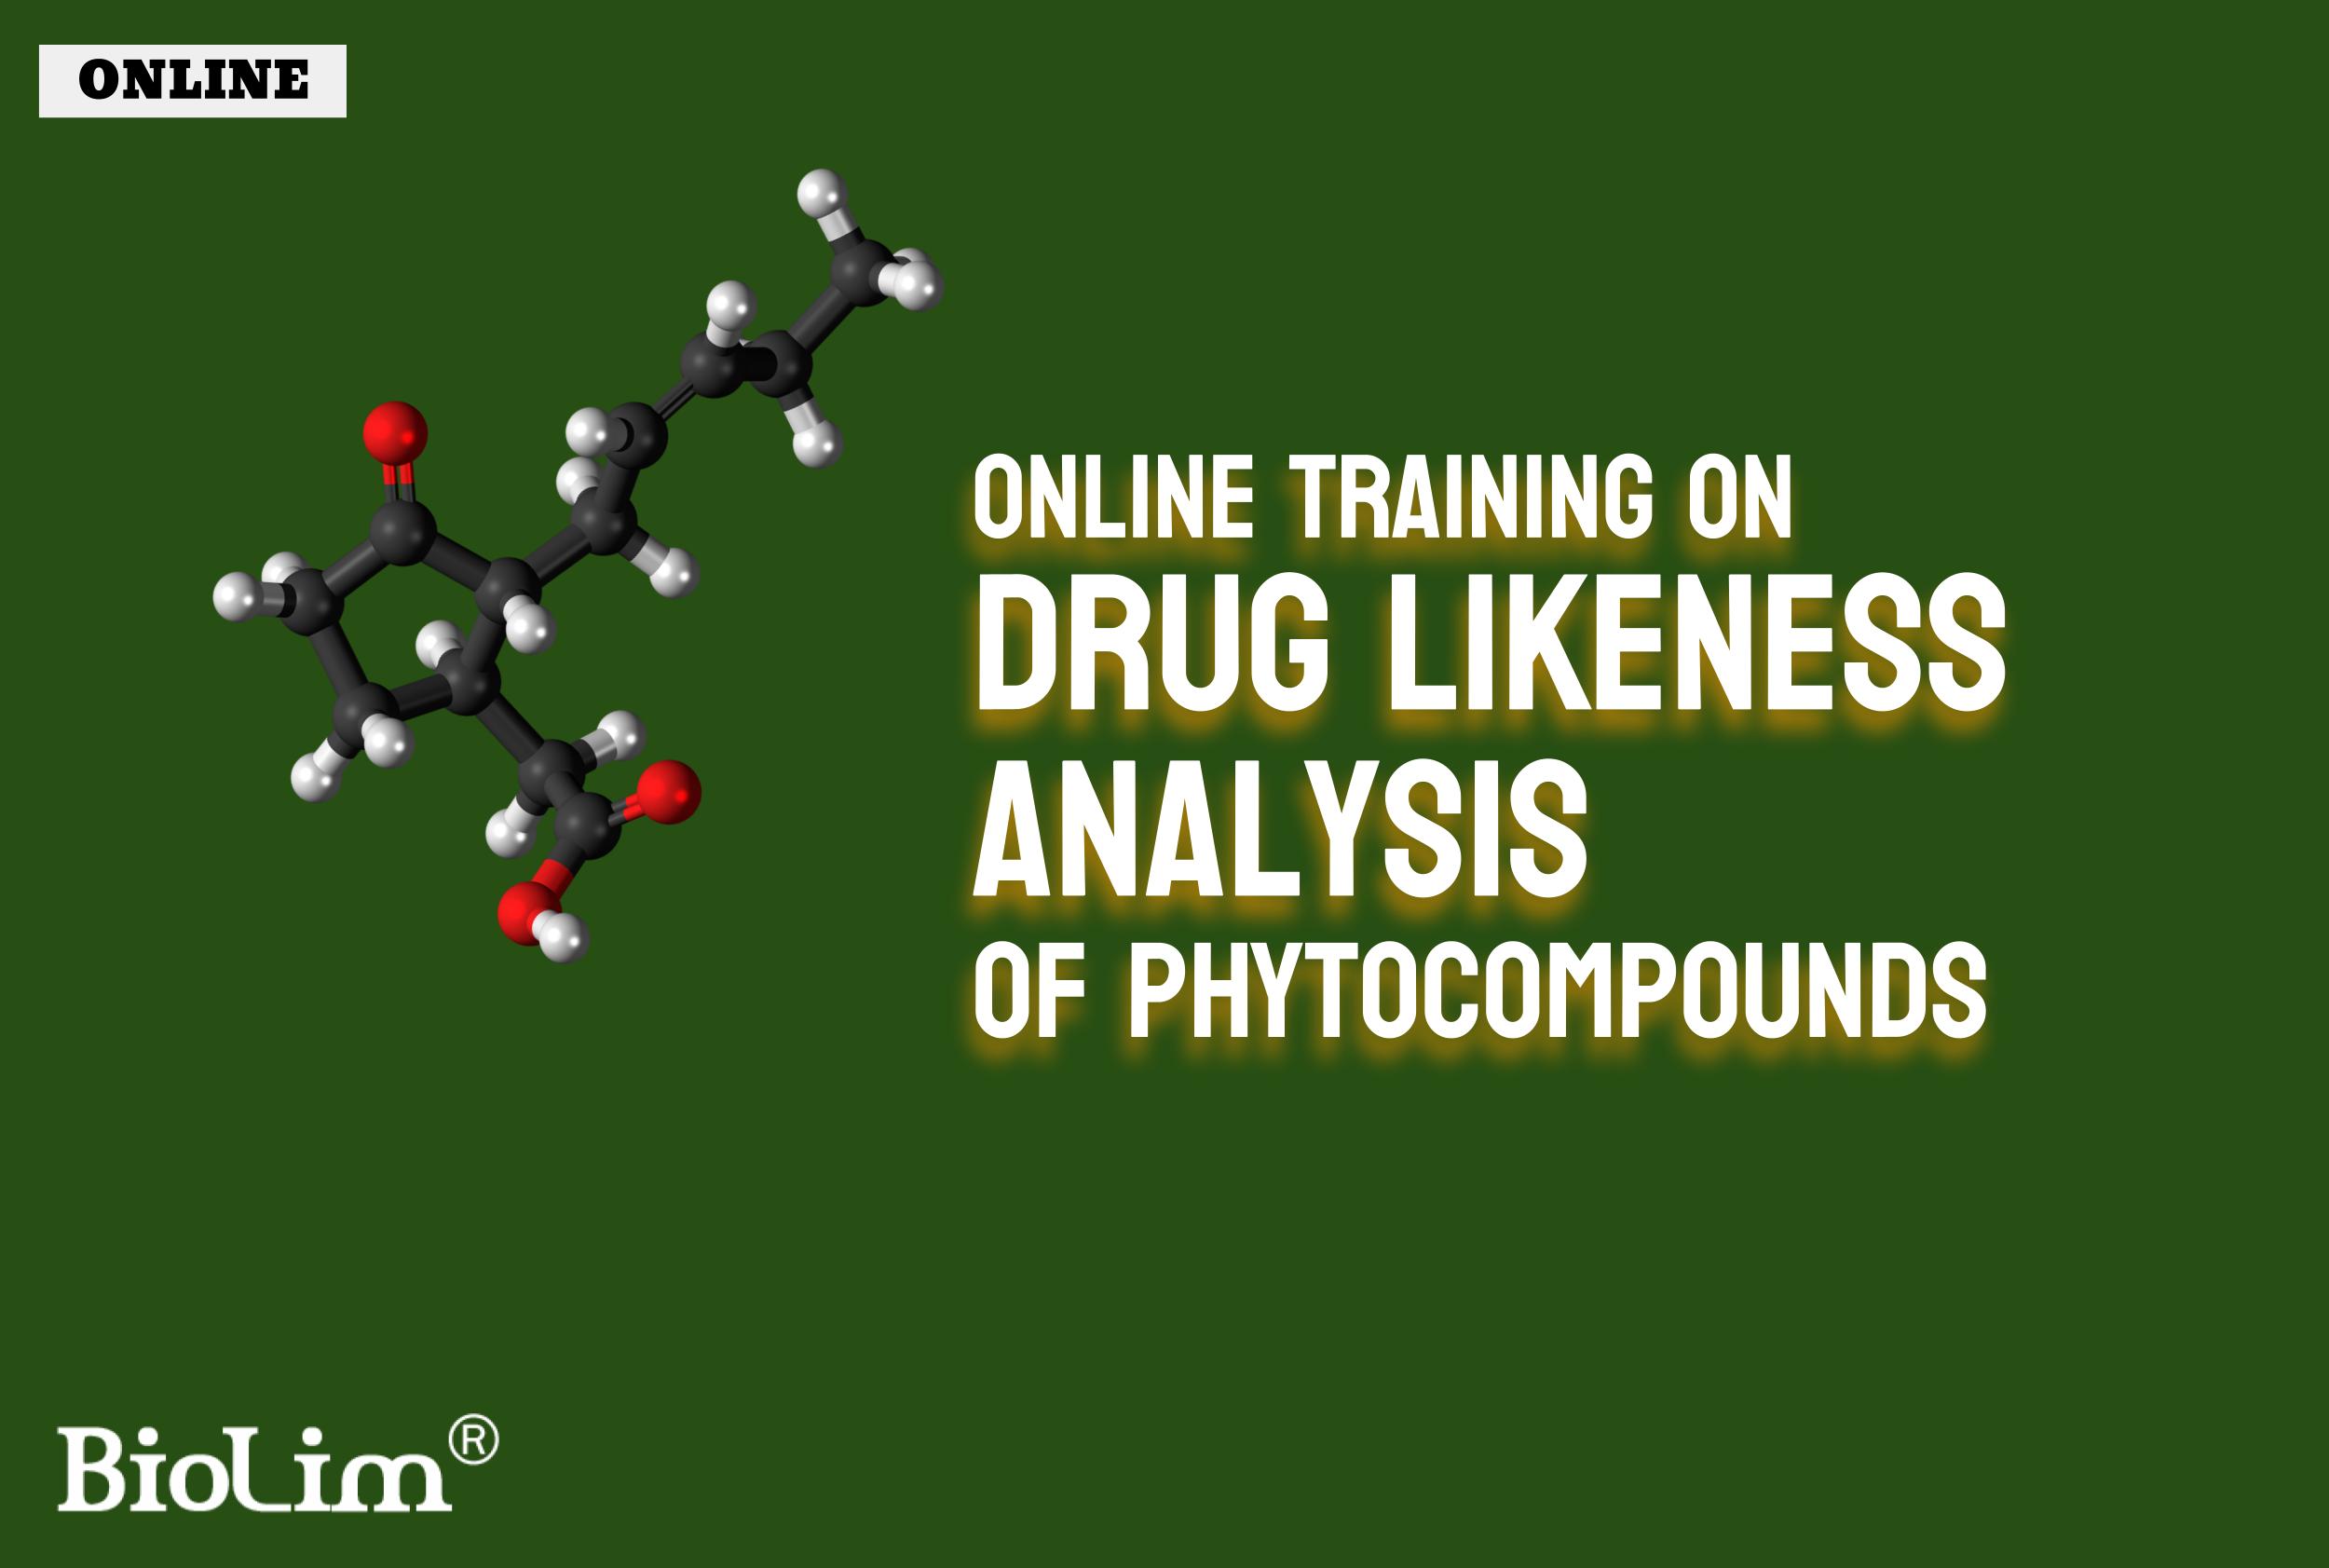 Online training on drug likeness analysis of phytocompounds